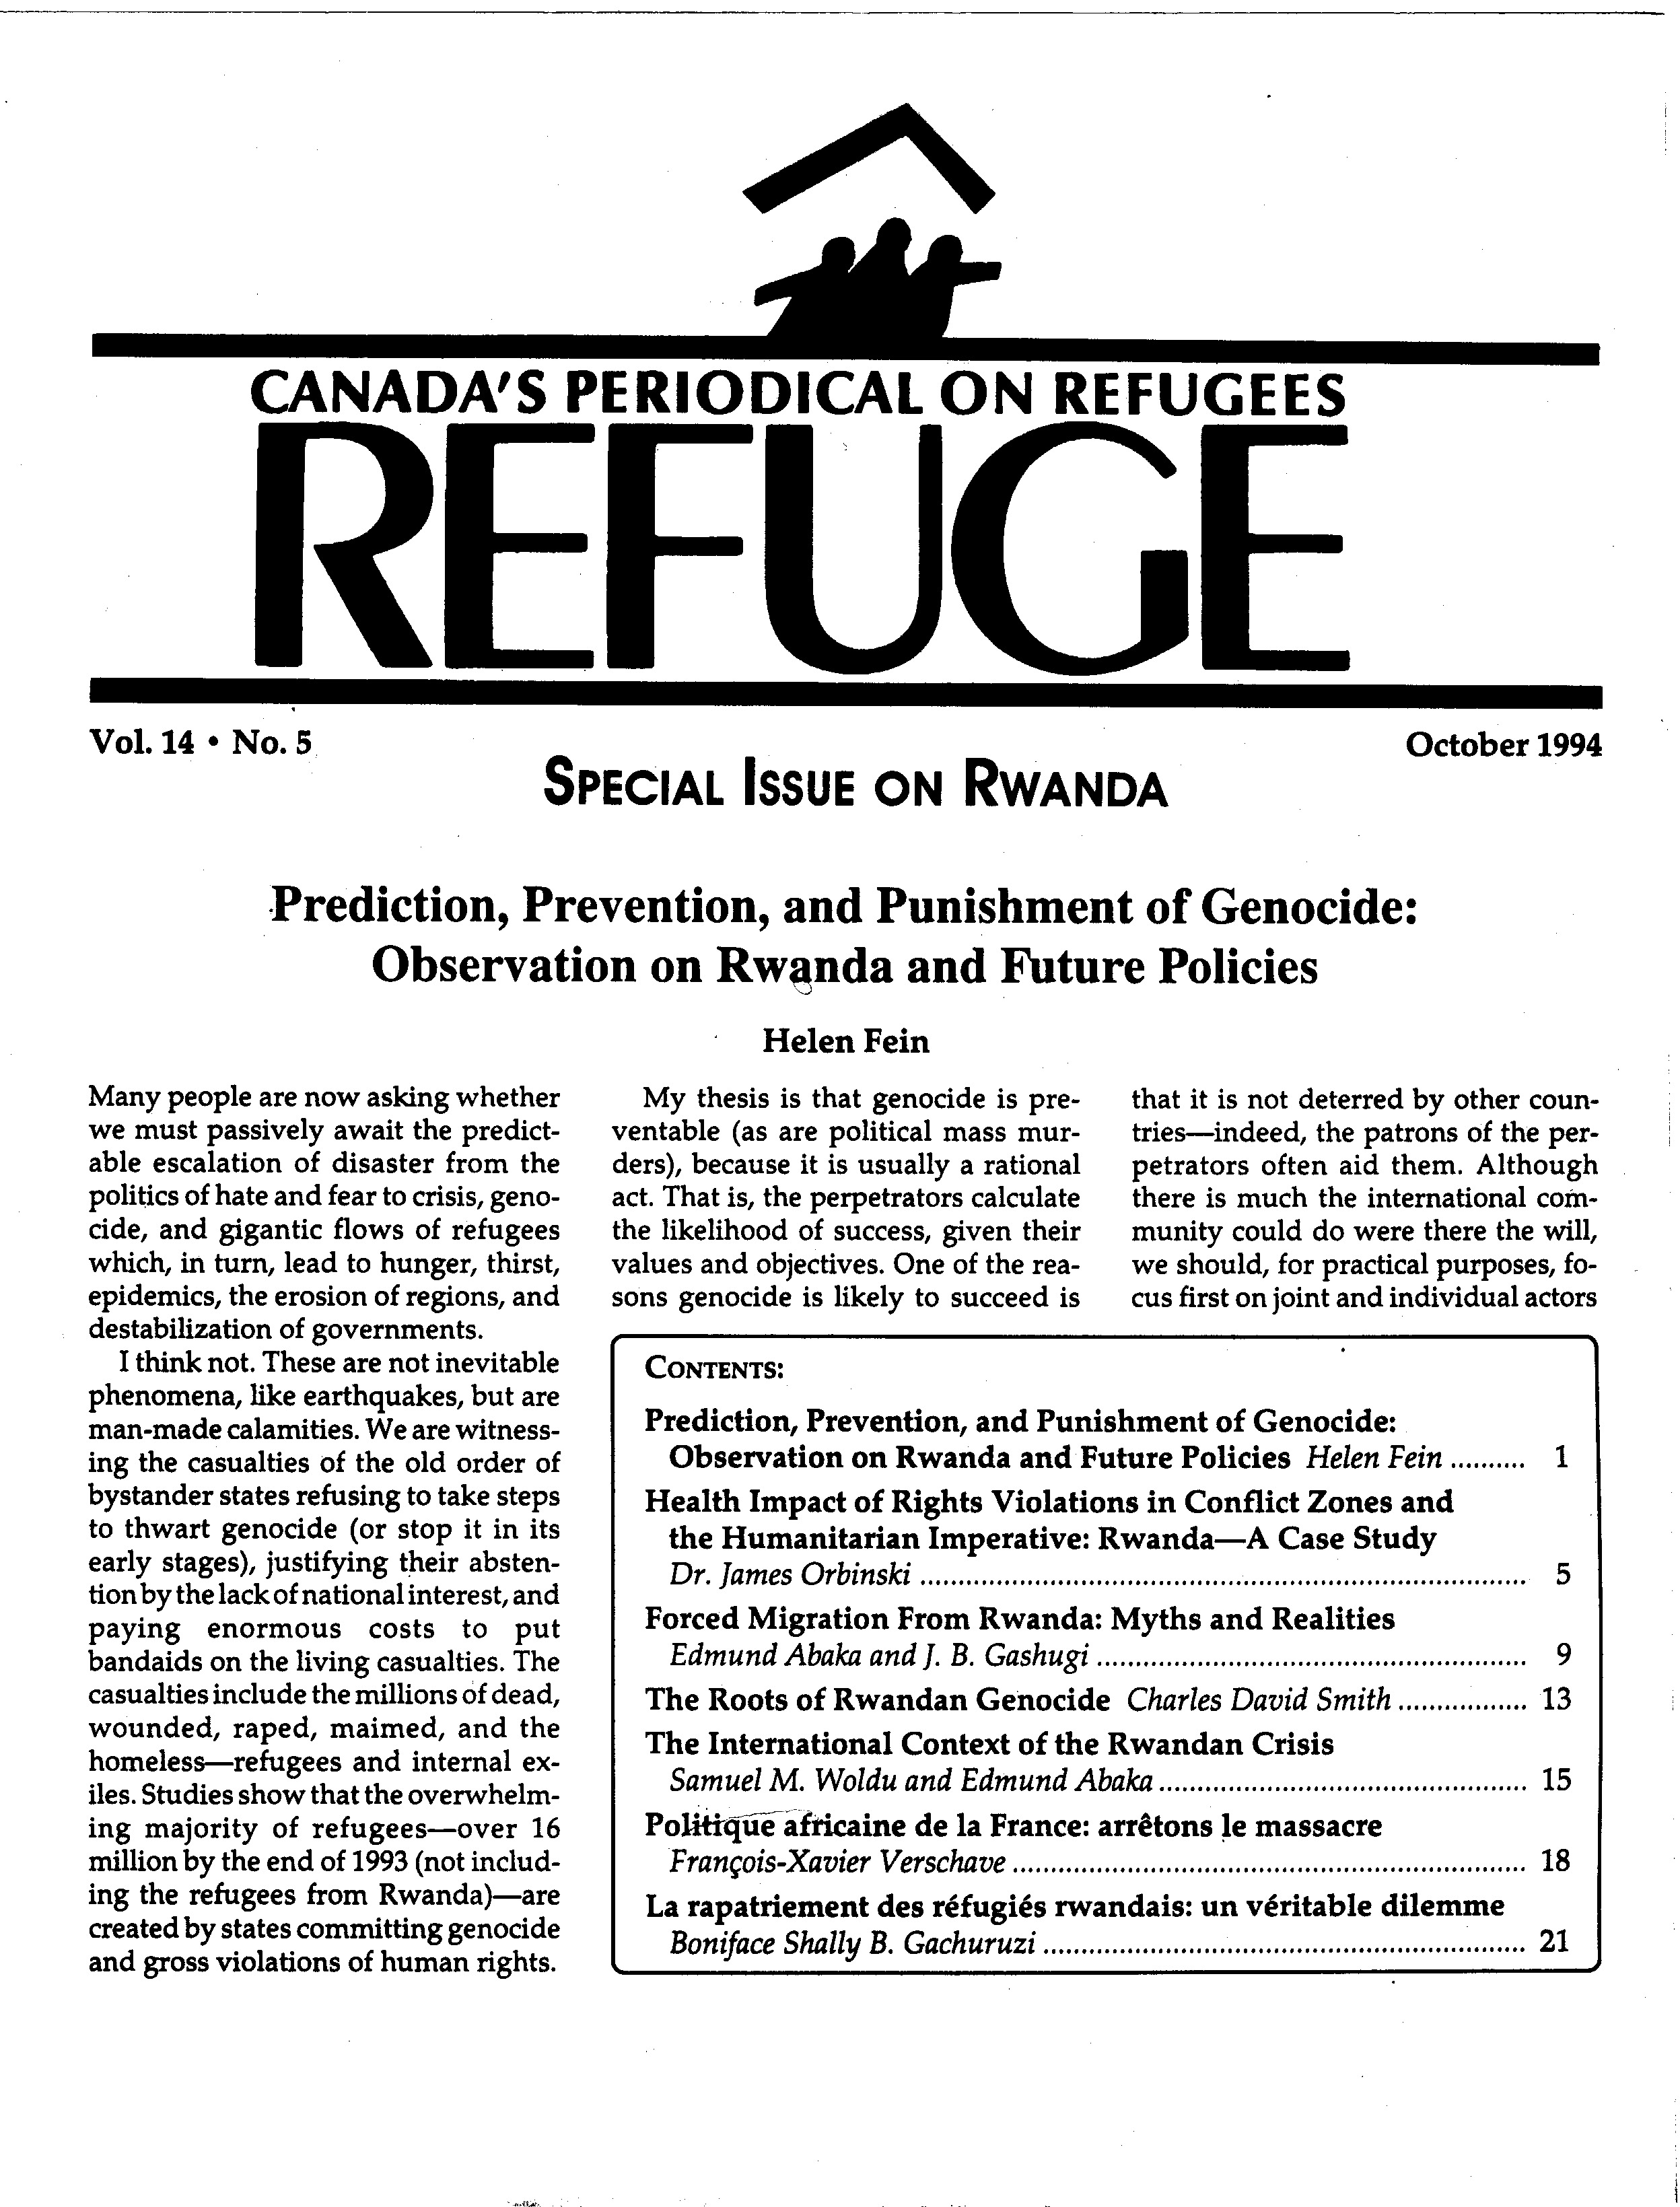 first page Refuge vol. 14.5 1994